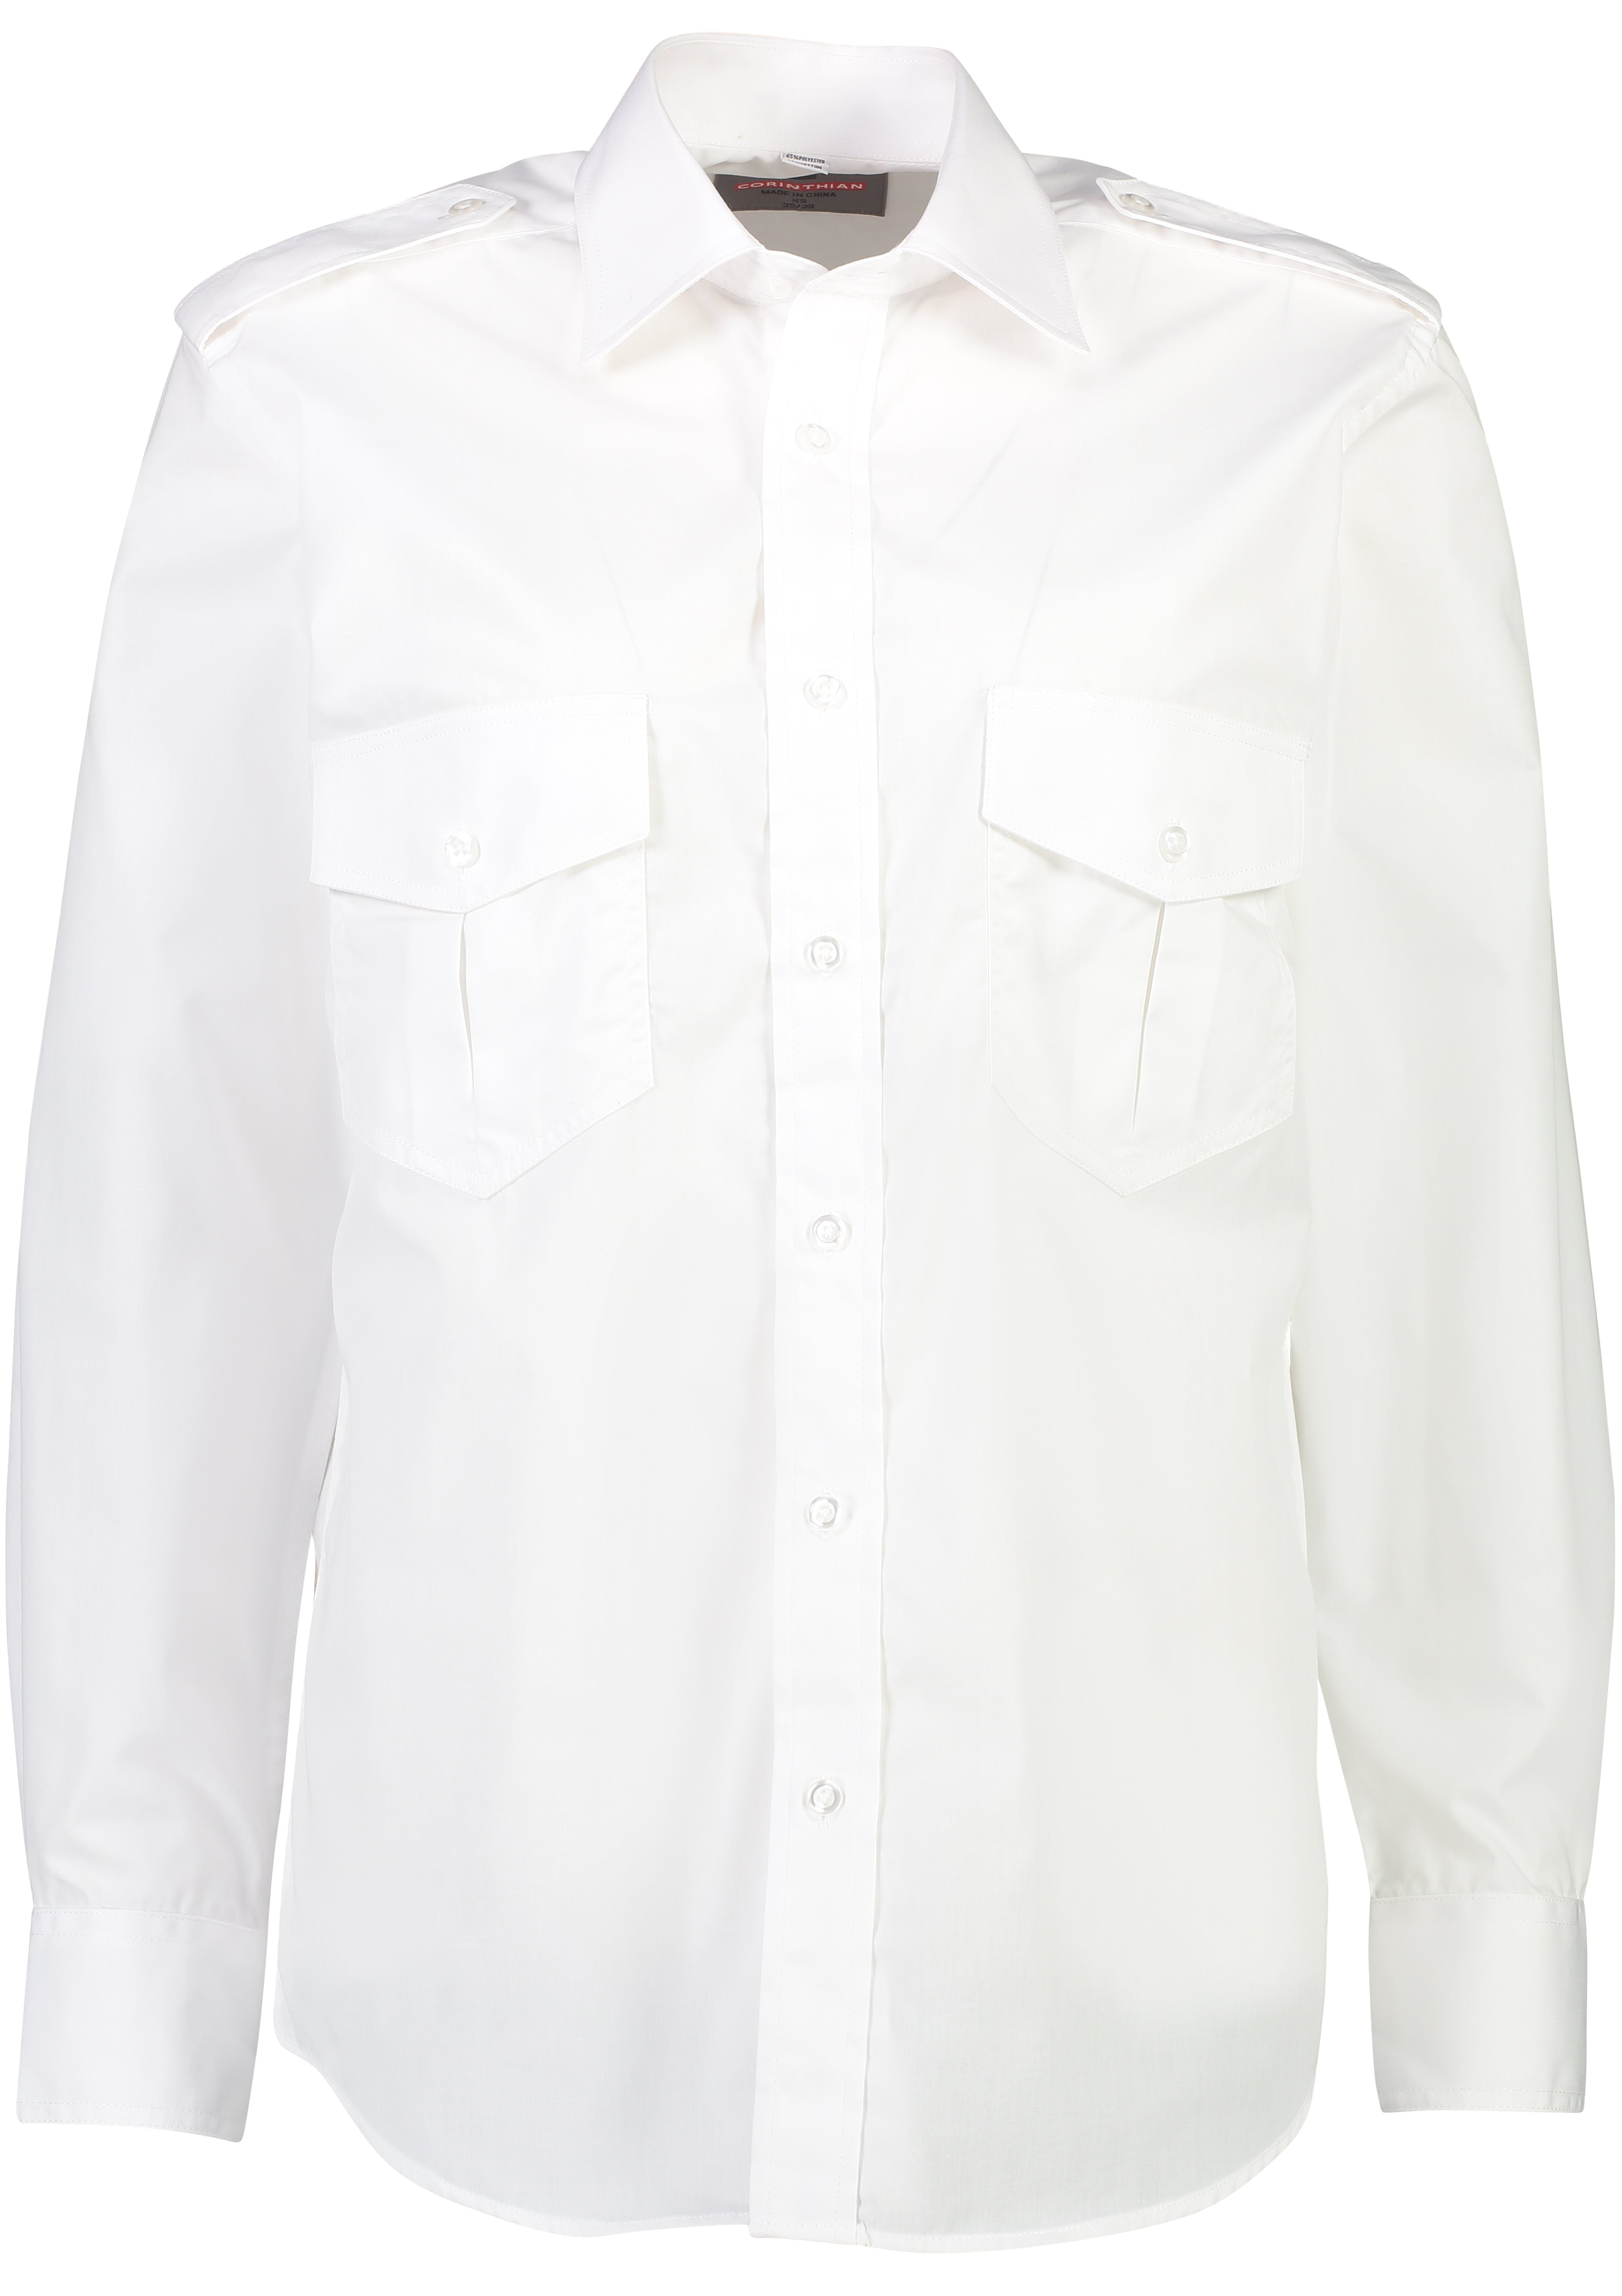 Mens Long Sleeve Pilot Dress Shirt White-Corinthian-Downunder Pilot Shop Australia